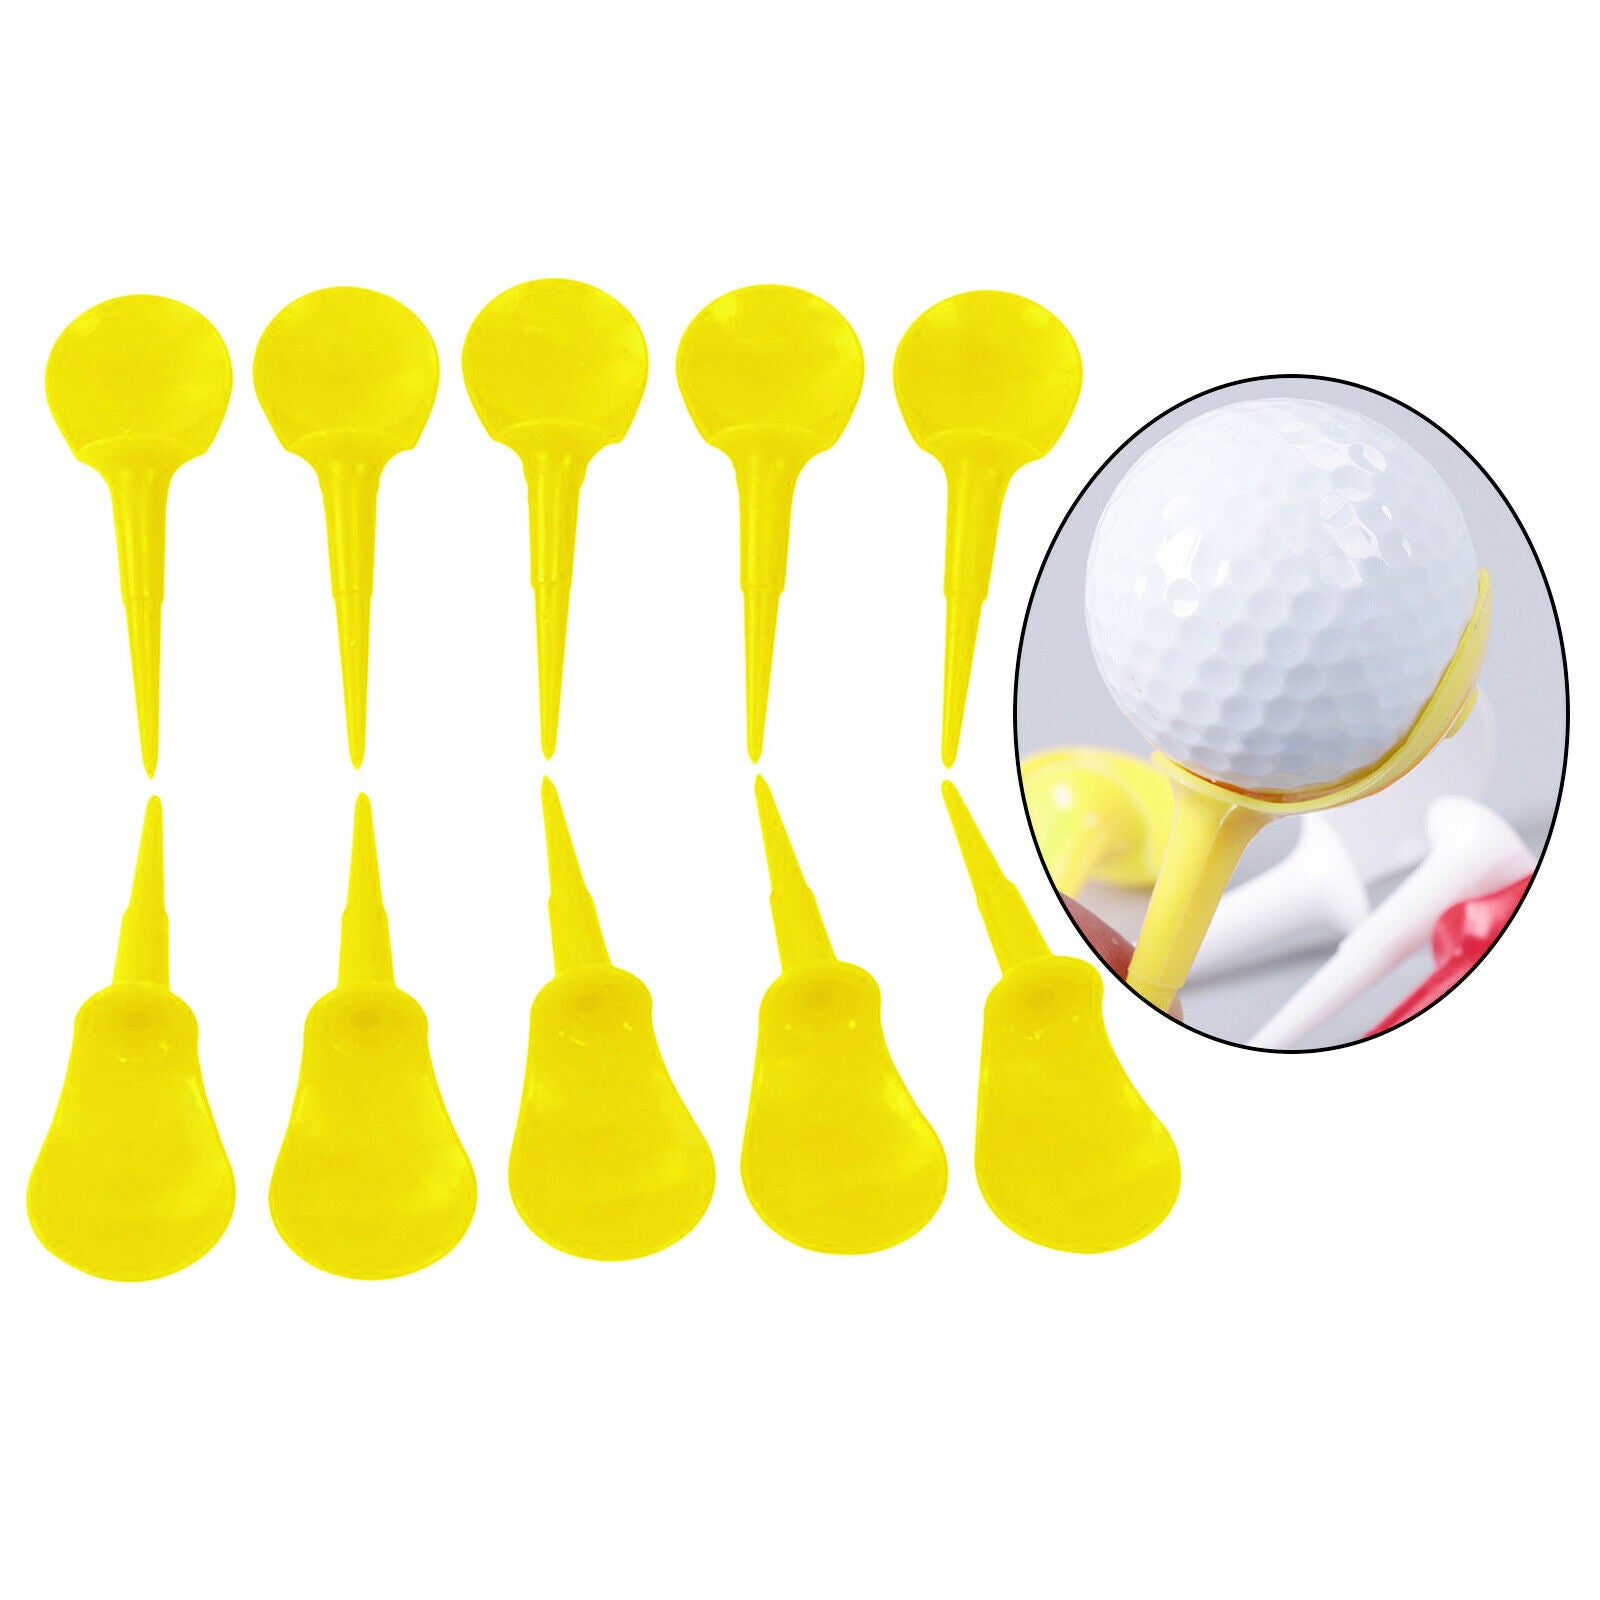 10/Set Golf Tees Driving Range Training Aids Equipment Beginners Yellow